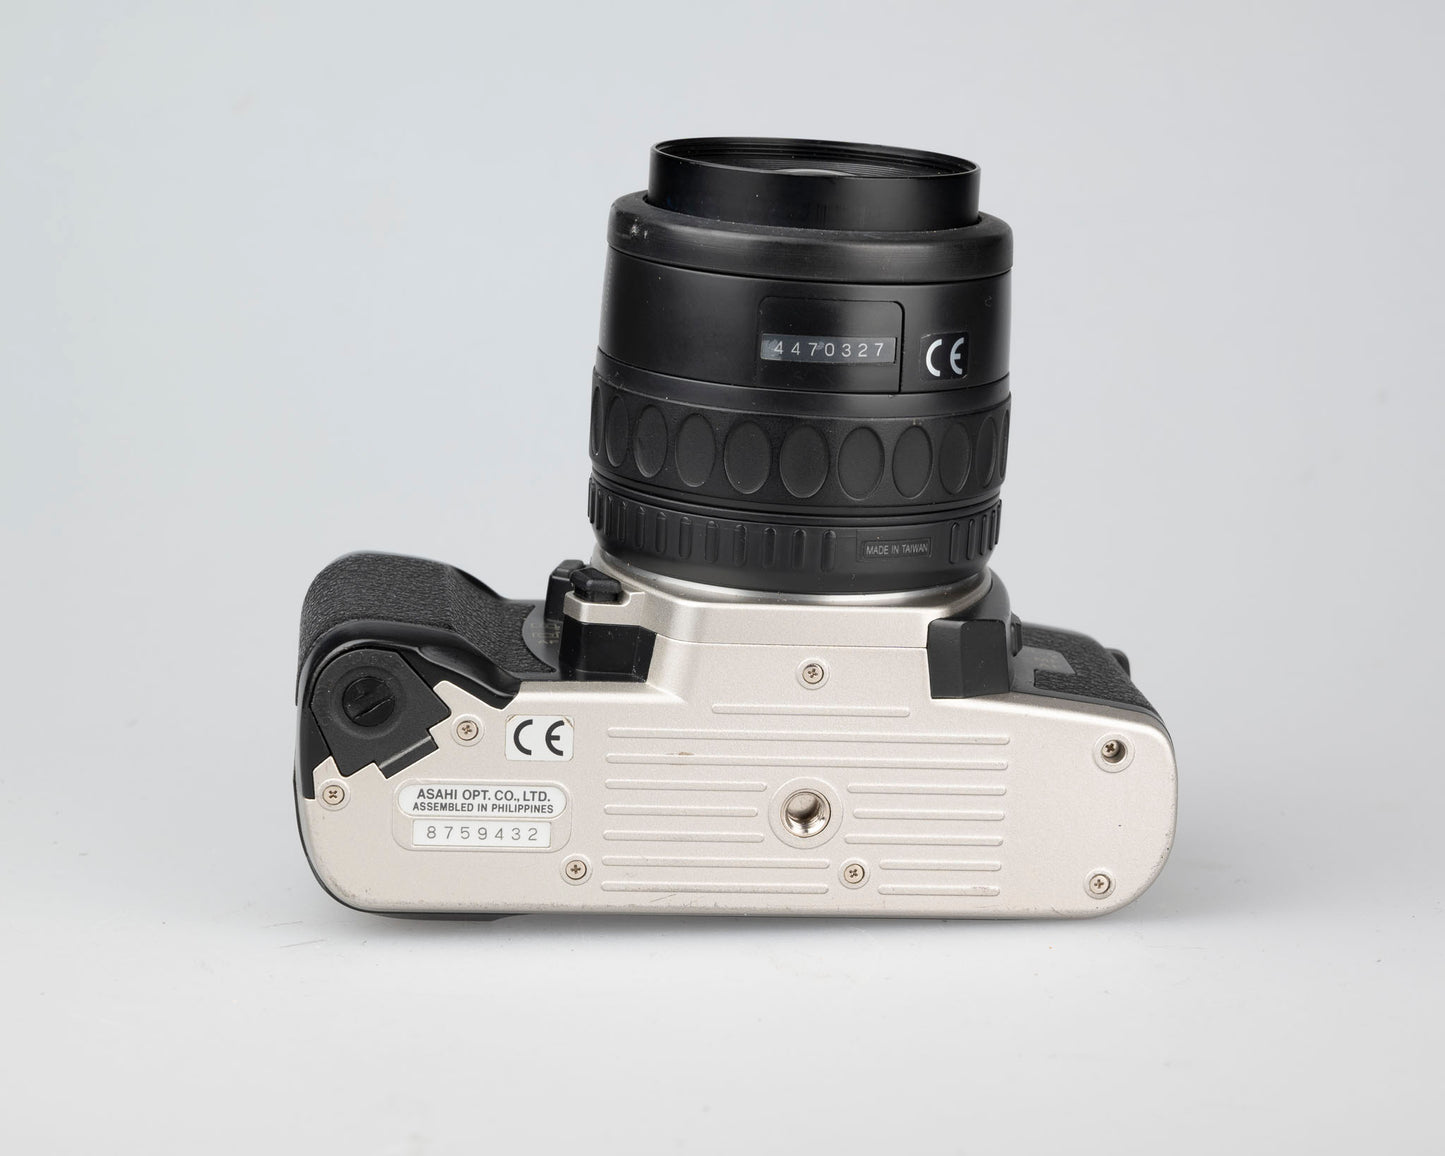 Pentax MZ-5N Reflex 35 mm avec objectif SMC Pentax-F 28-80 mm (série 8759432)